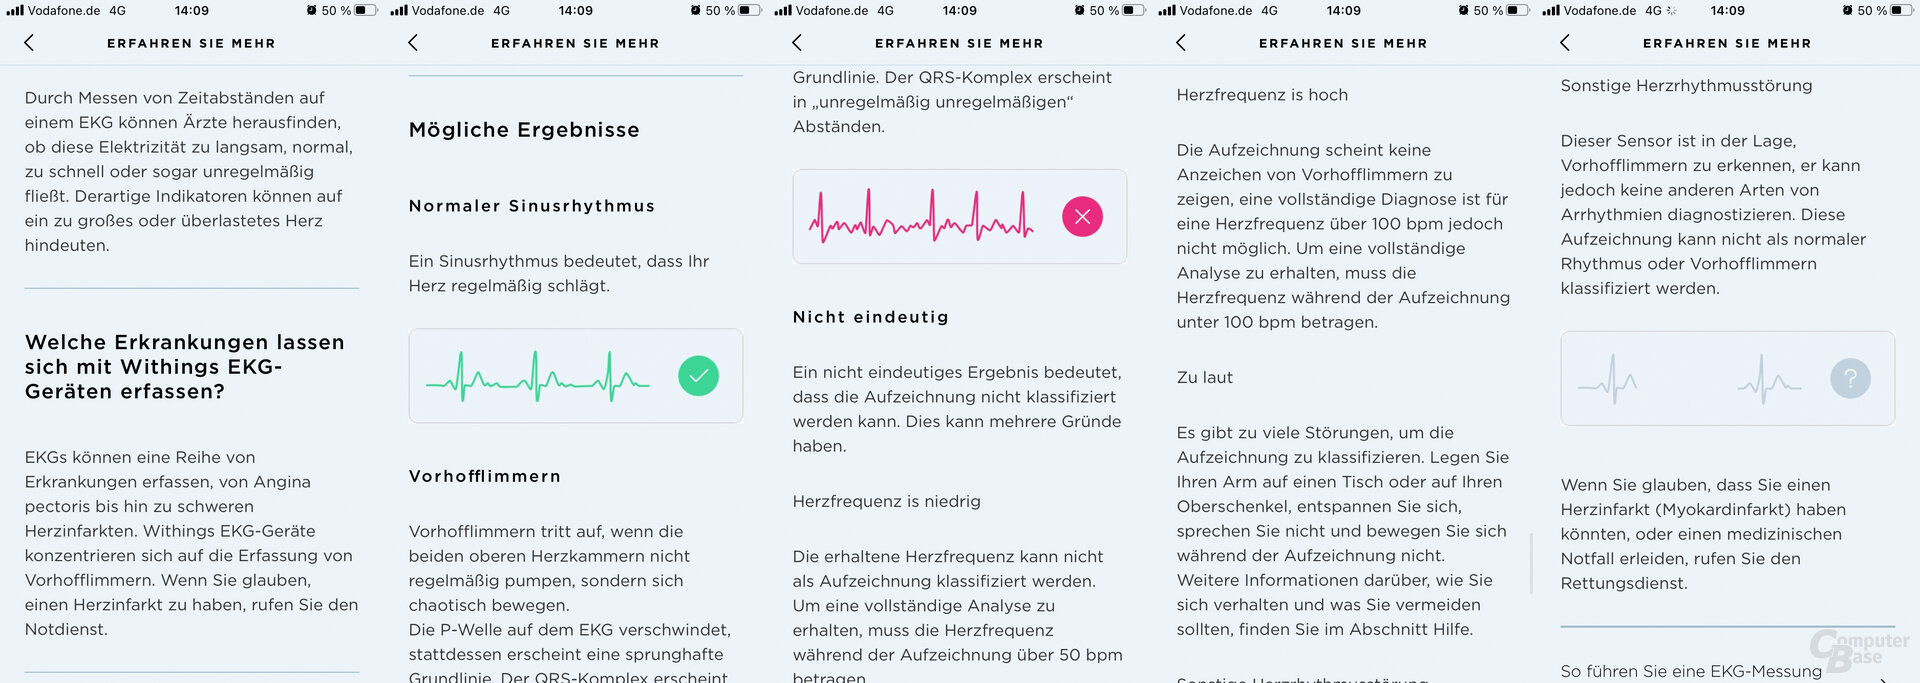 Withings Health Mate App: Erläuterungen zum EKG